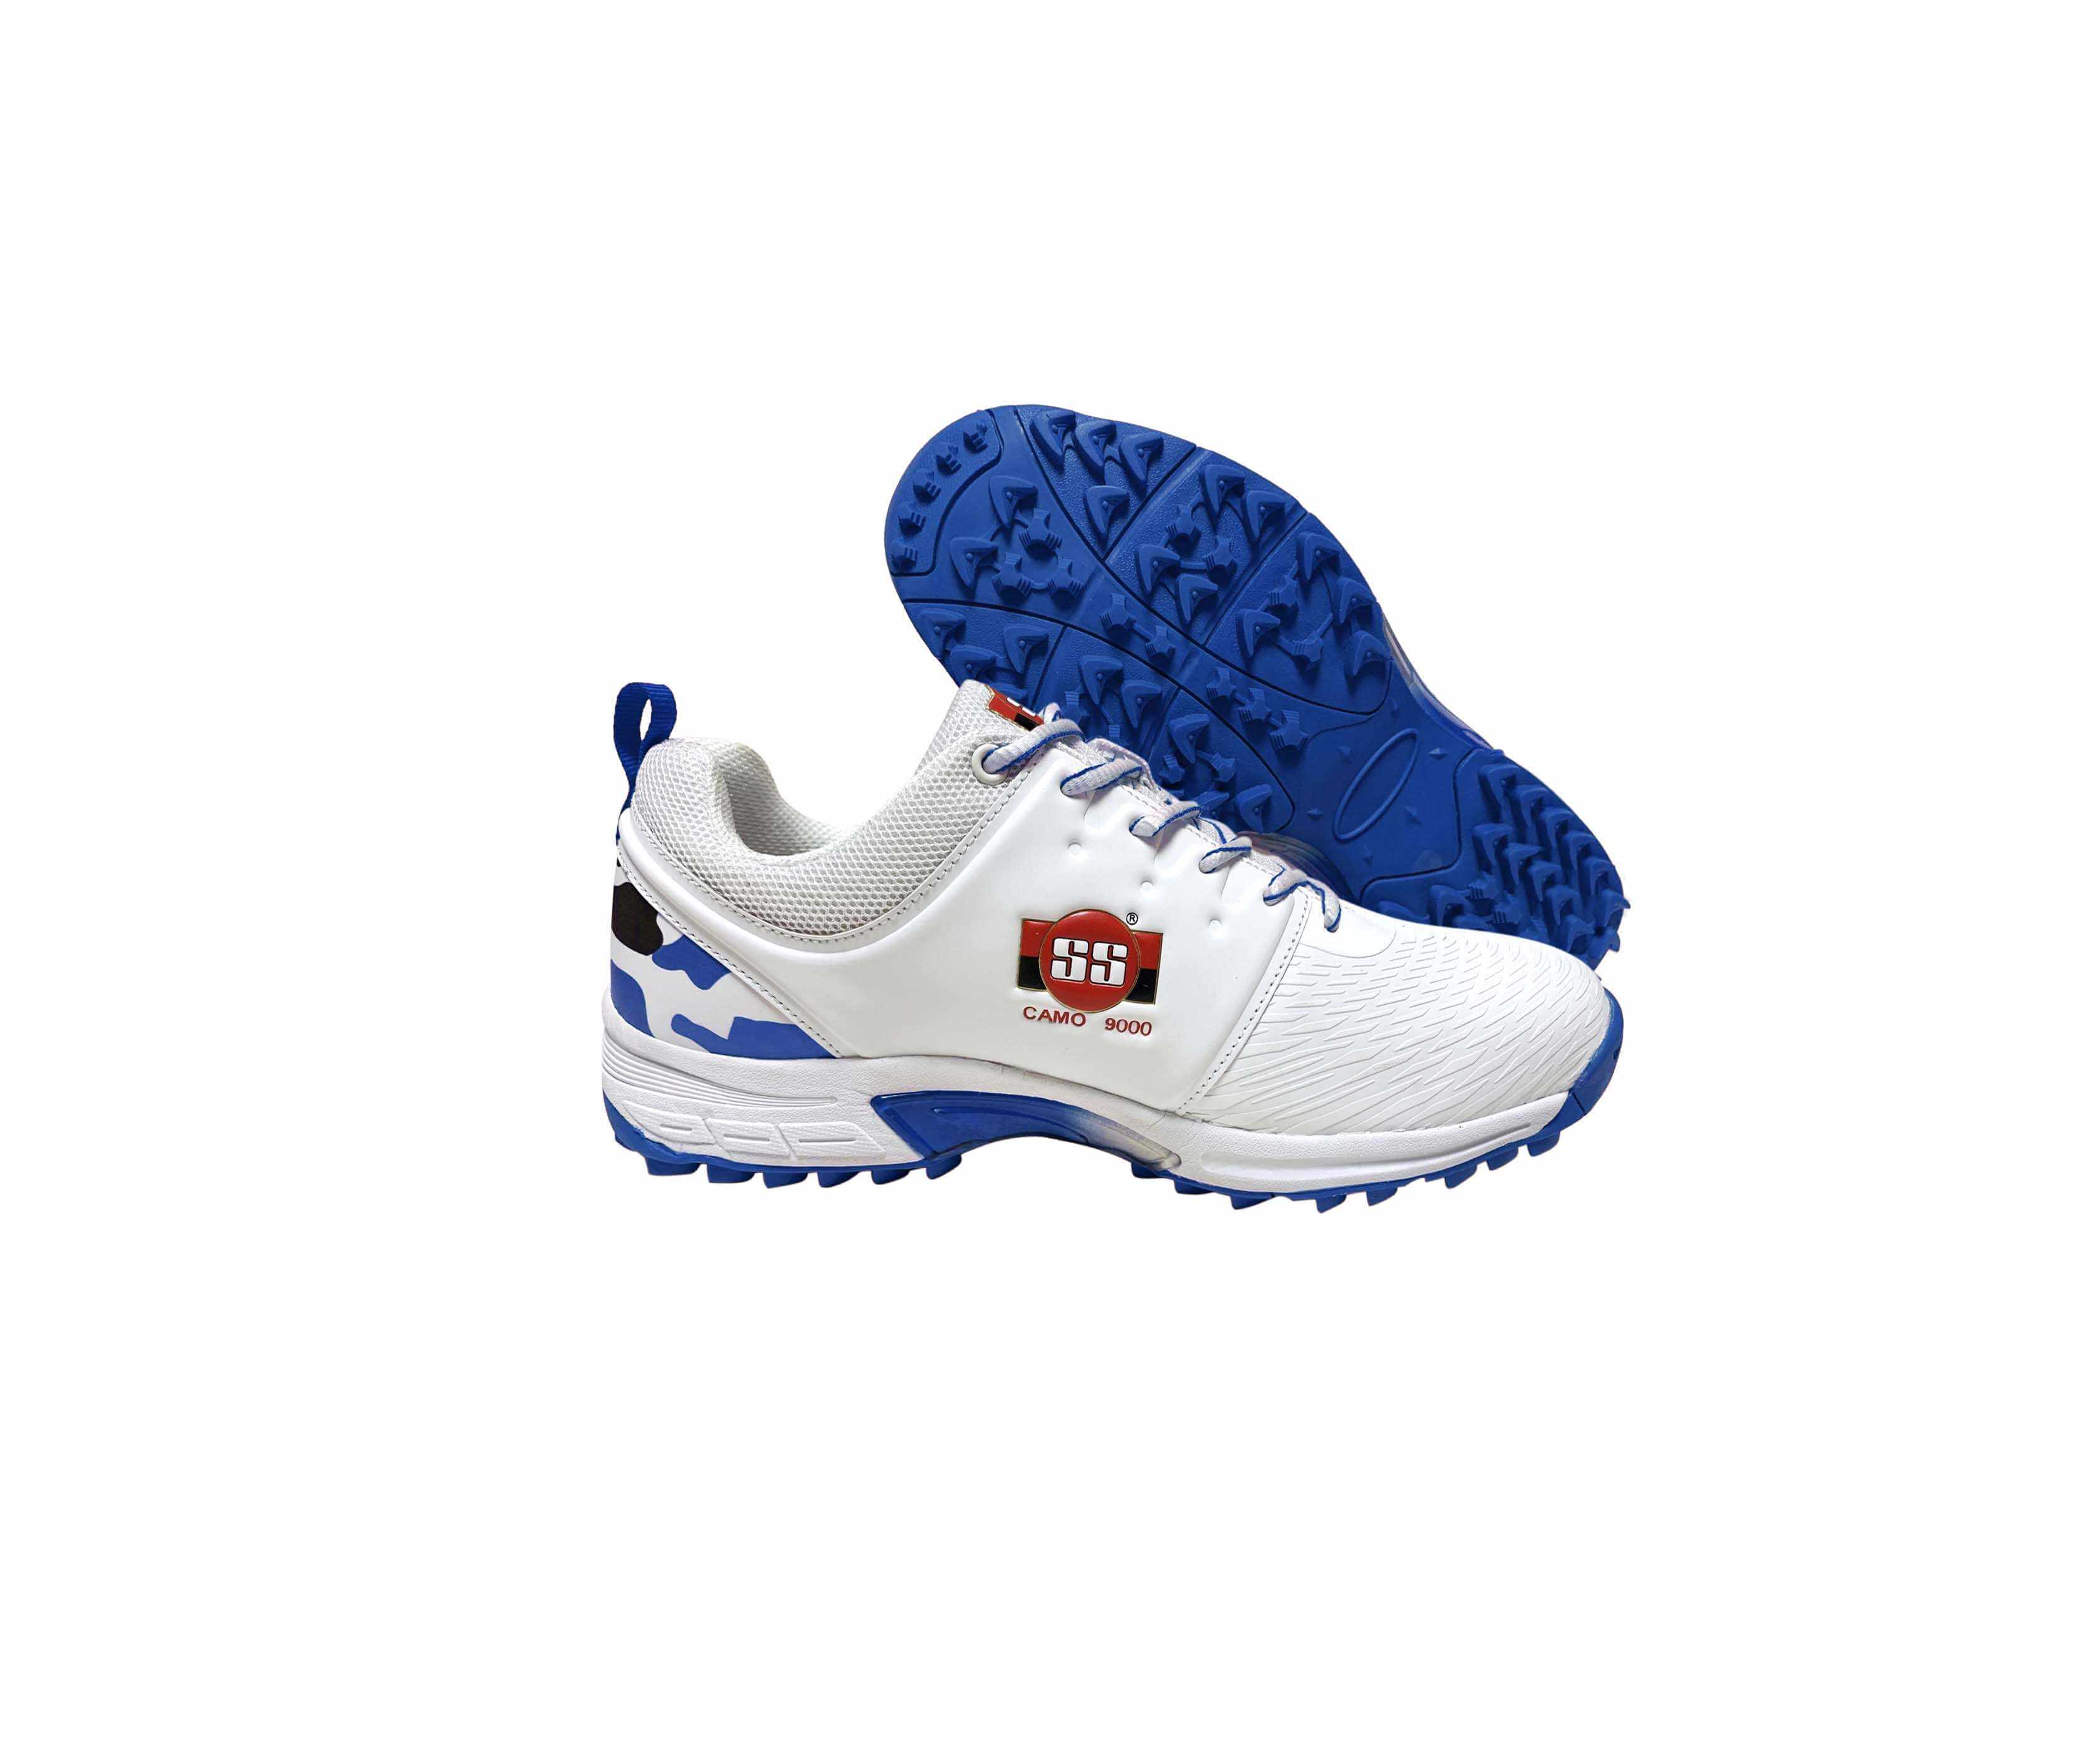 SS TON Camo 9000 Cricket Shoes (White/Blue)